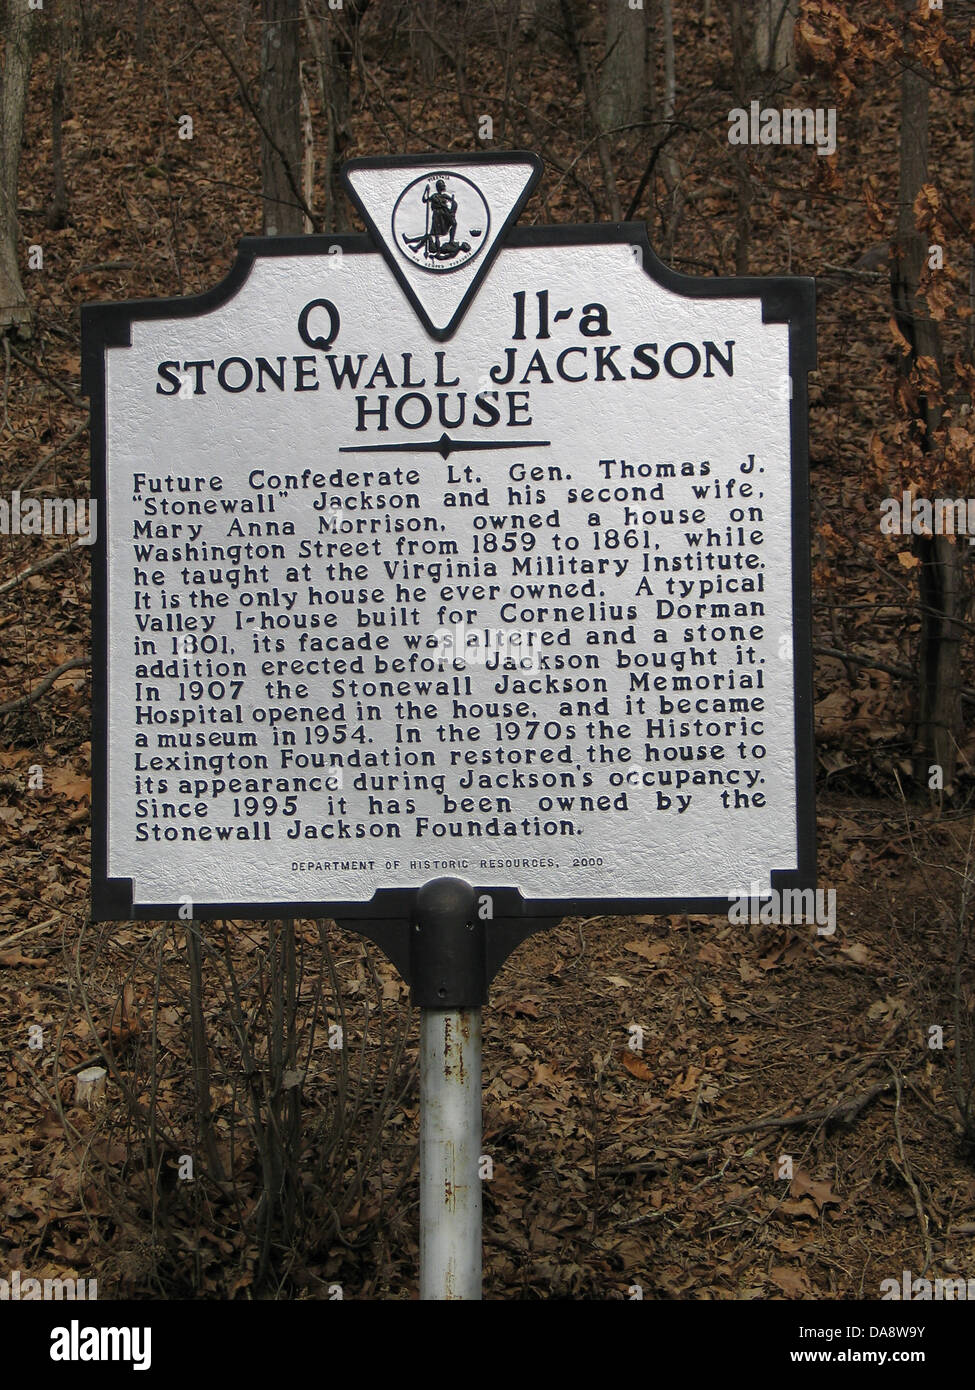 STONEWALL JACKSON Haus Zukunft konföderierte Generalleutnant Thomas J. "Stonewall" Jackson und seine zweite Frau, Mary Anna Morrison, hilfber Stockfoto